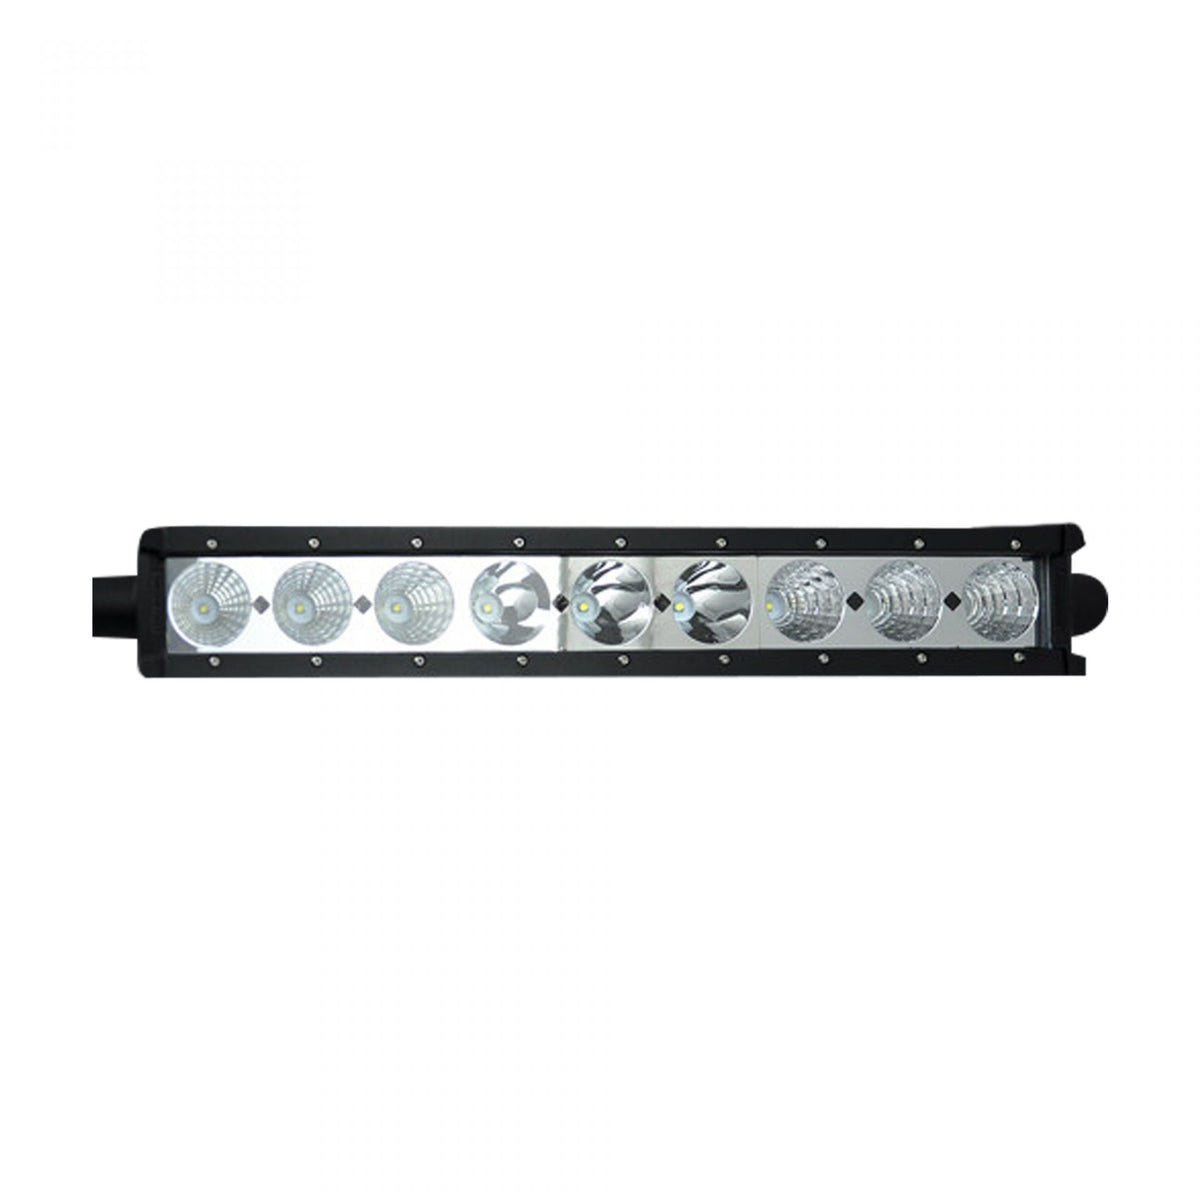 6750 LUMEN 18" LED LIGHT BAR &amp; RECON WIRING KIT - 9 Individual 10-Watt (90-Watt Total) CREE XML LEDs